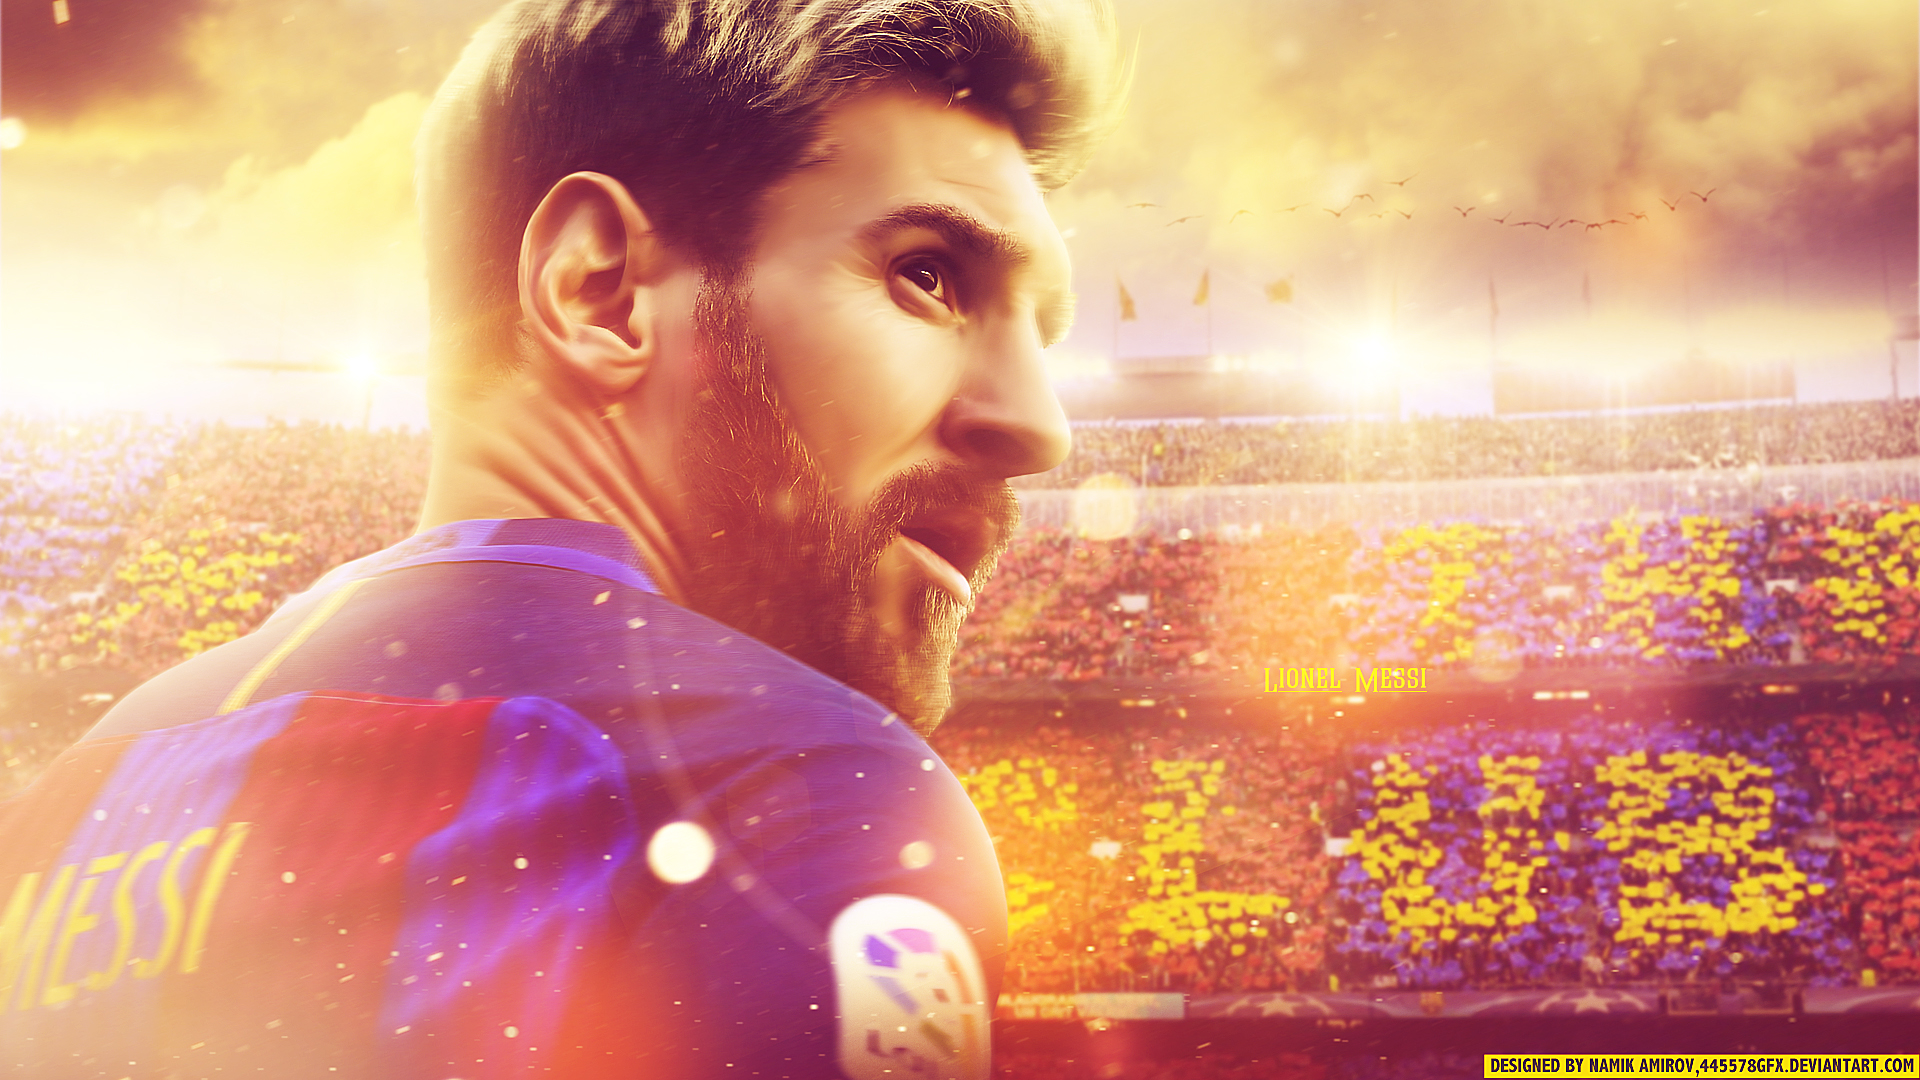 Fc Barcelona Lionel Messi Soccer 1920x1080